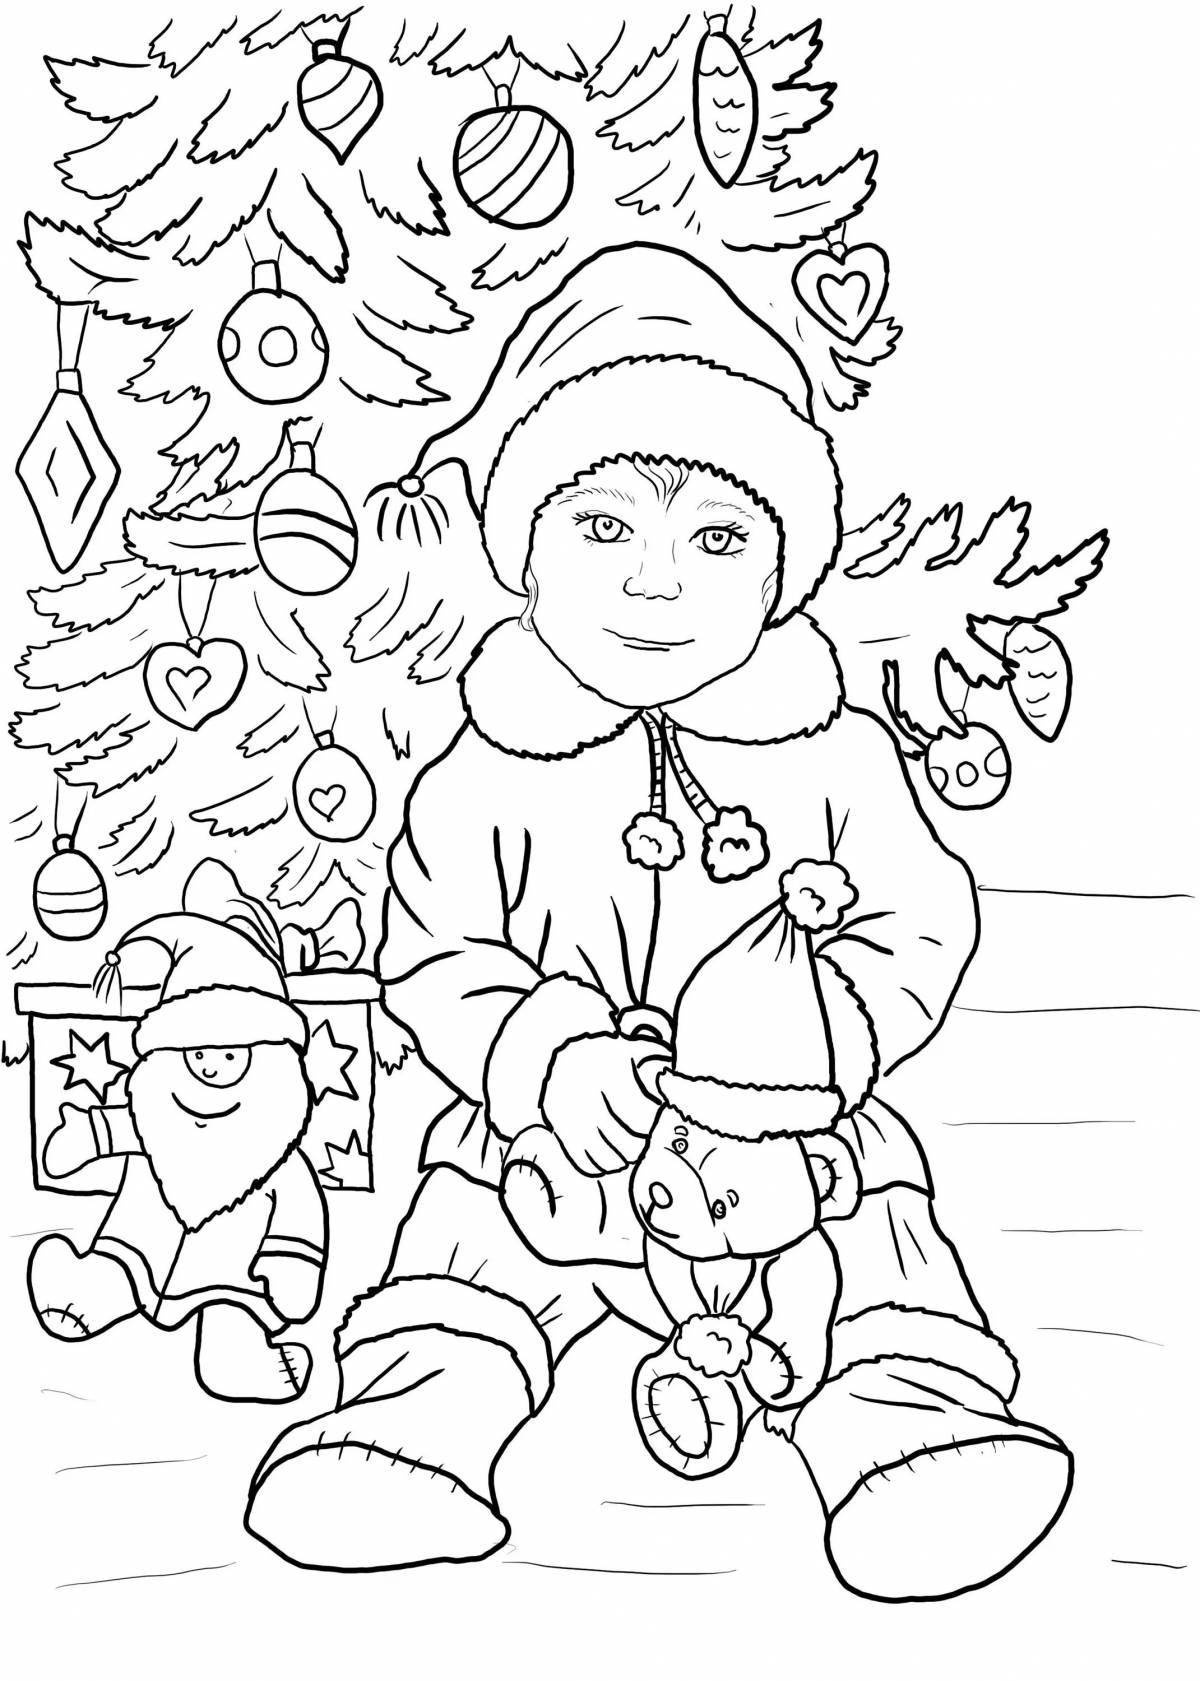 Creative Christmas coloring book for boys